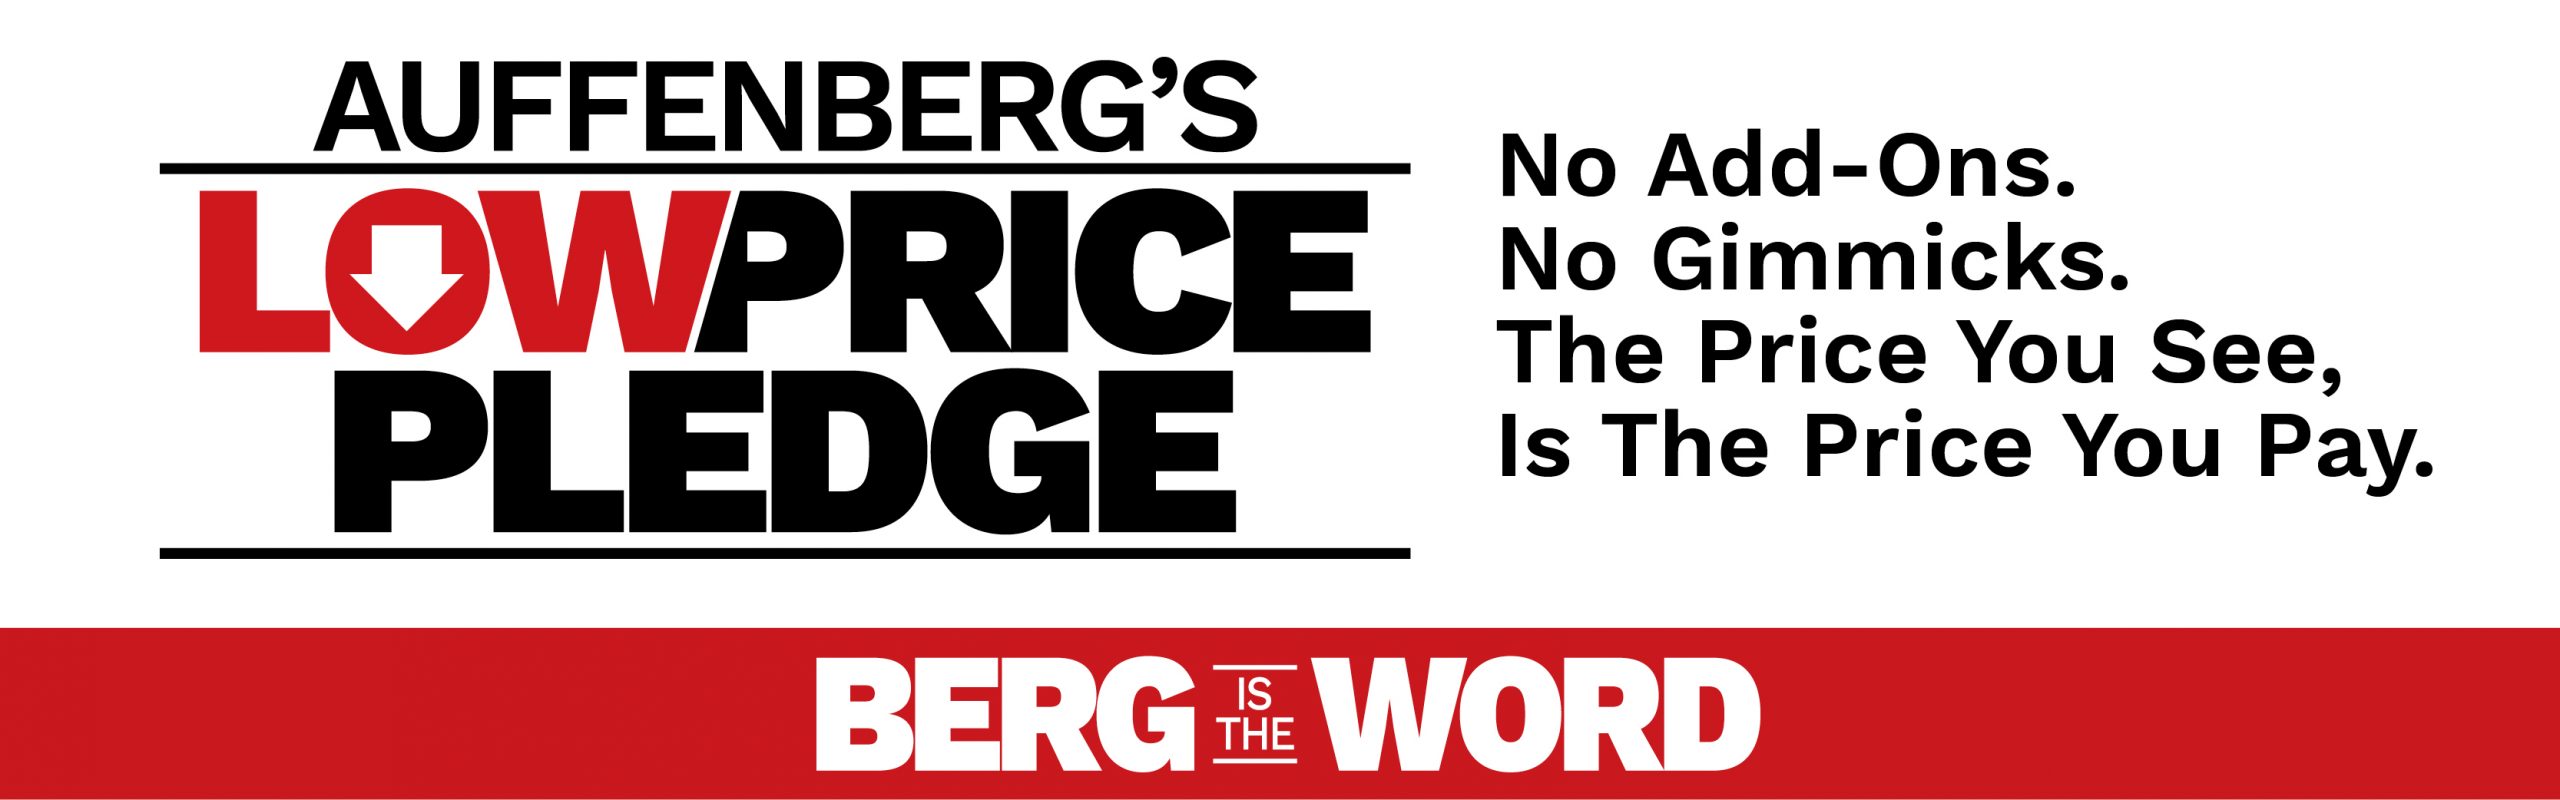 Auffenberg-Price-Pledge-Banners